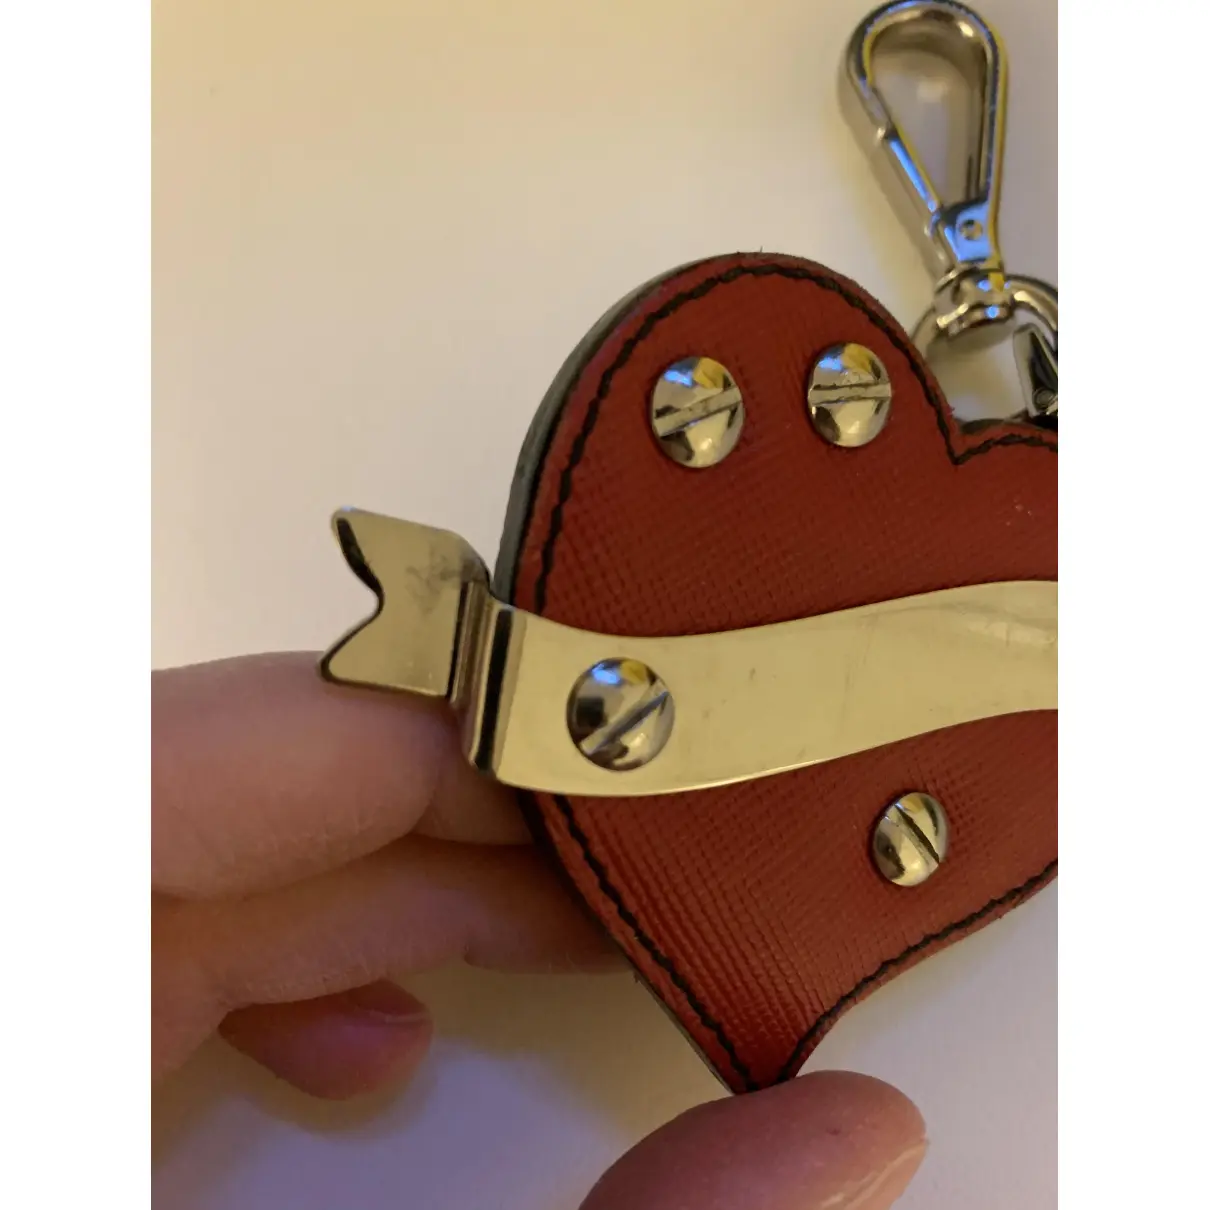 Leather key ring Prada